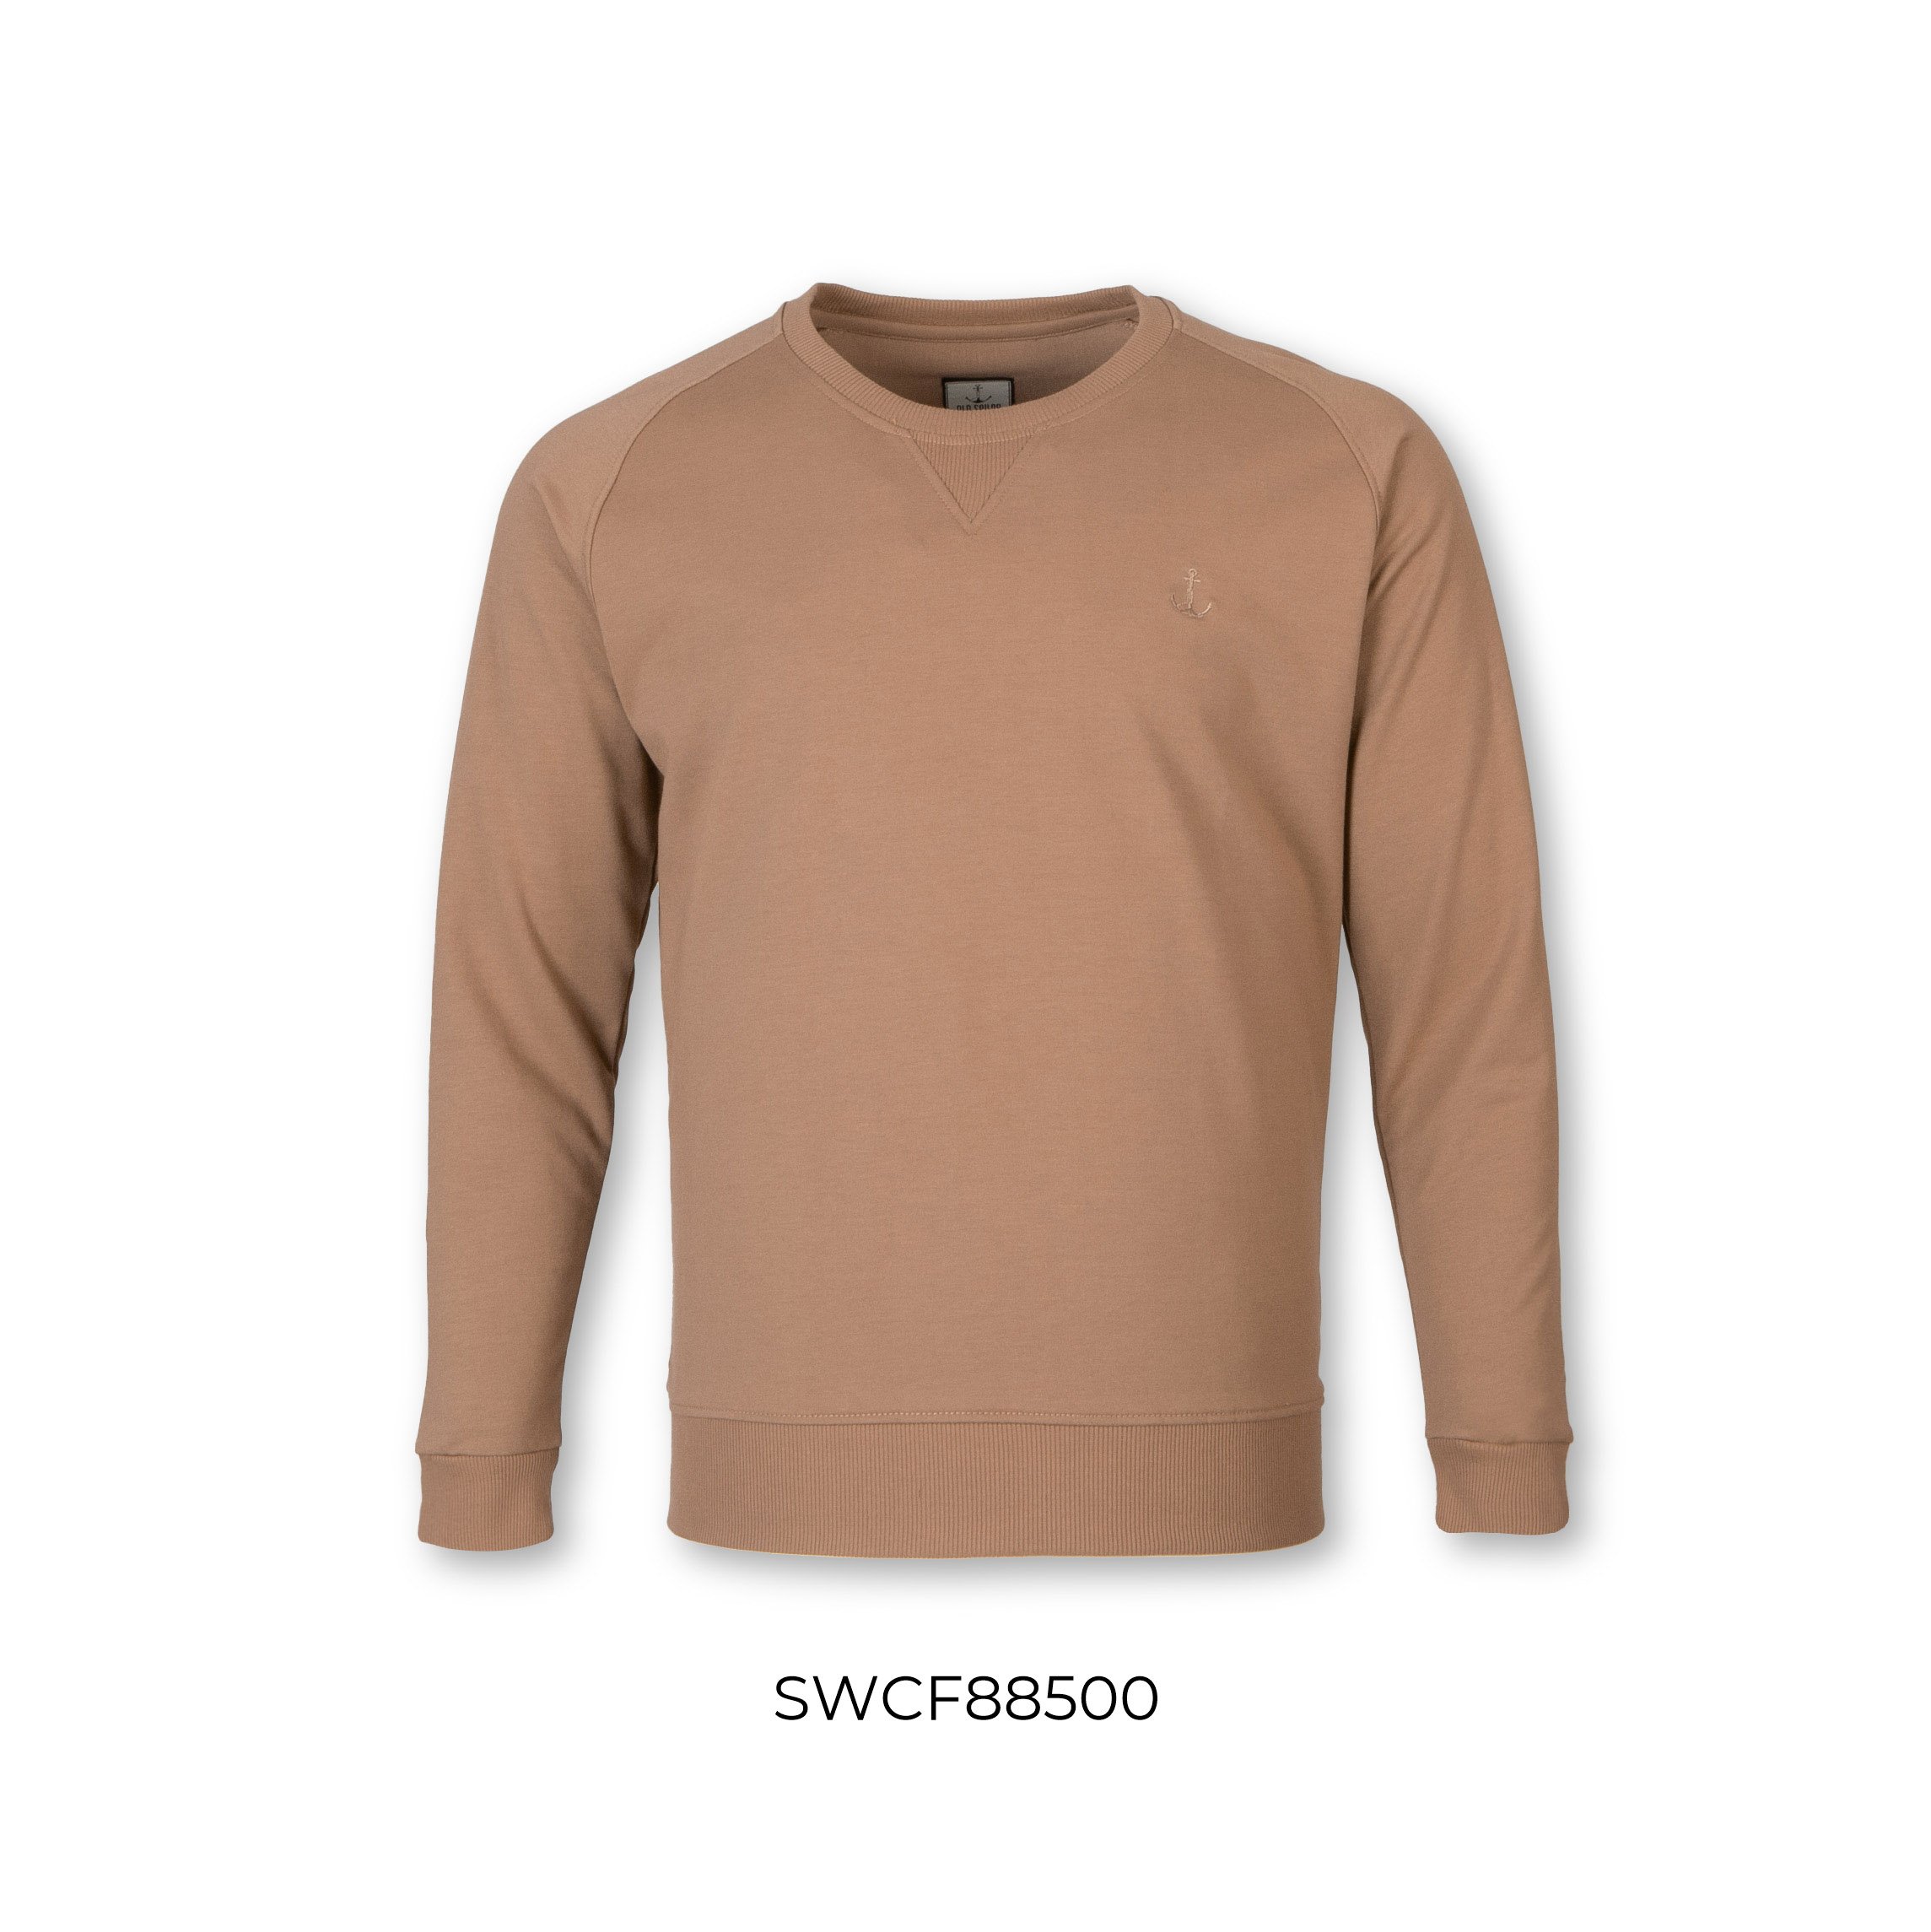 Áo sweater nam Old Sailor - O.S.L SWEATER BASIC - BROWN - SWCF88500 - nâu - Big size upto 5XL